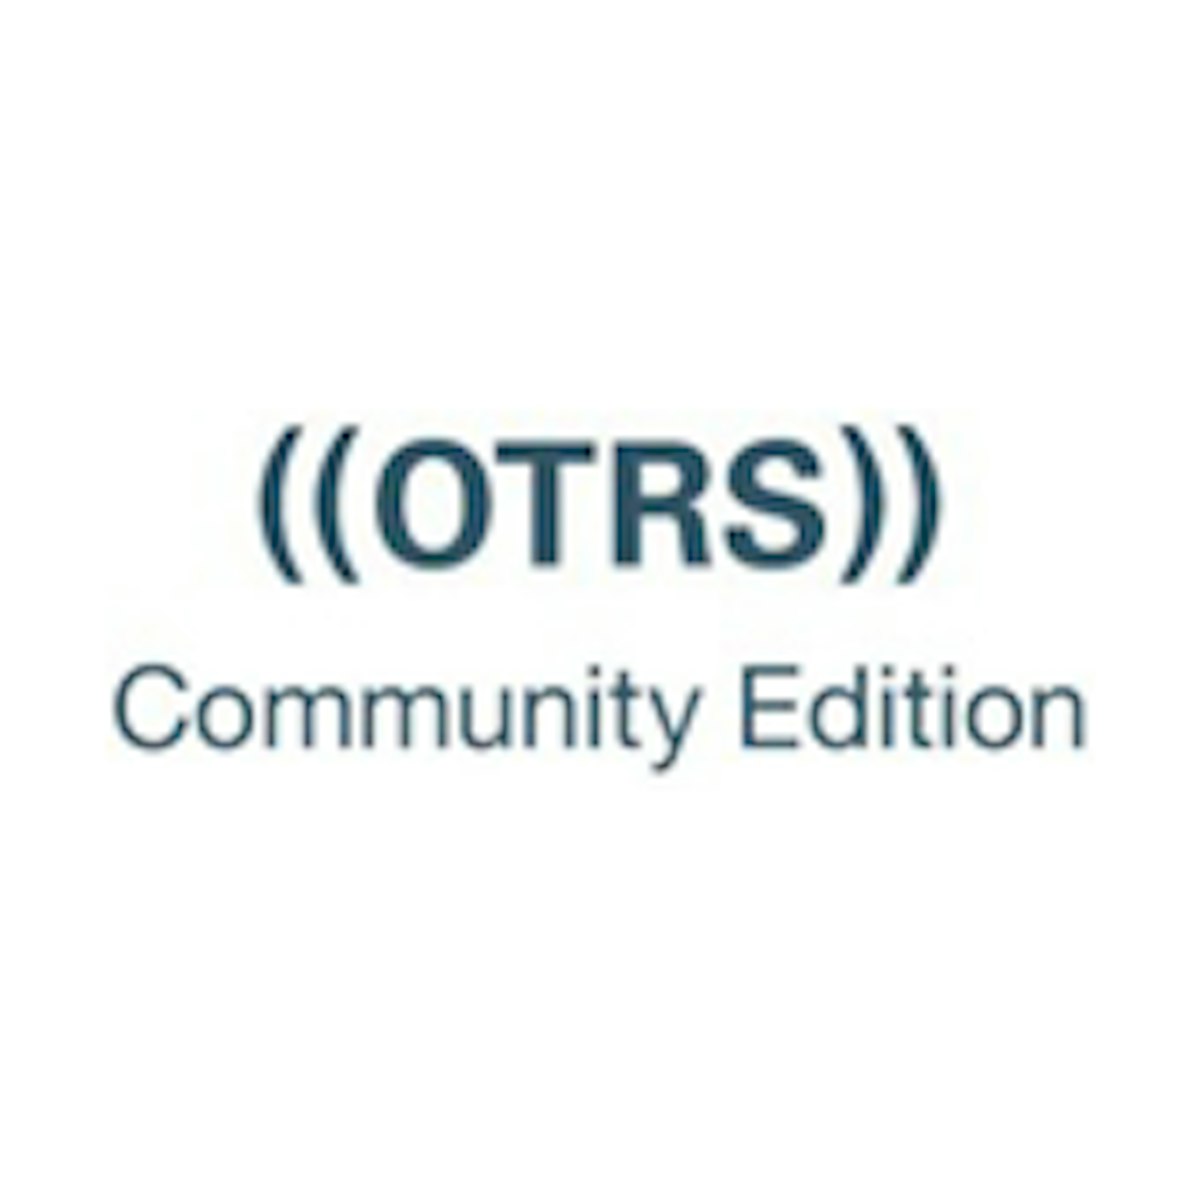 ((OTRS)) Community Edition